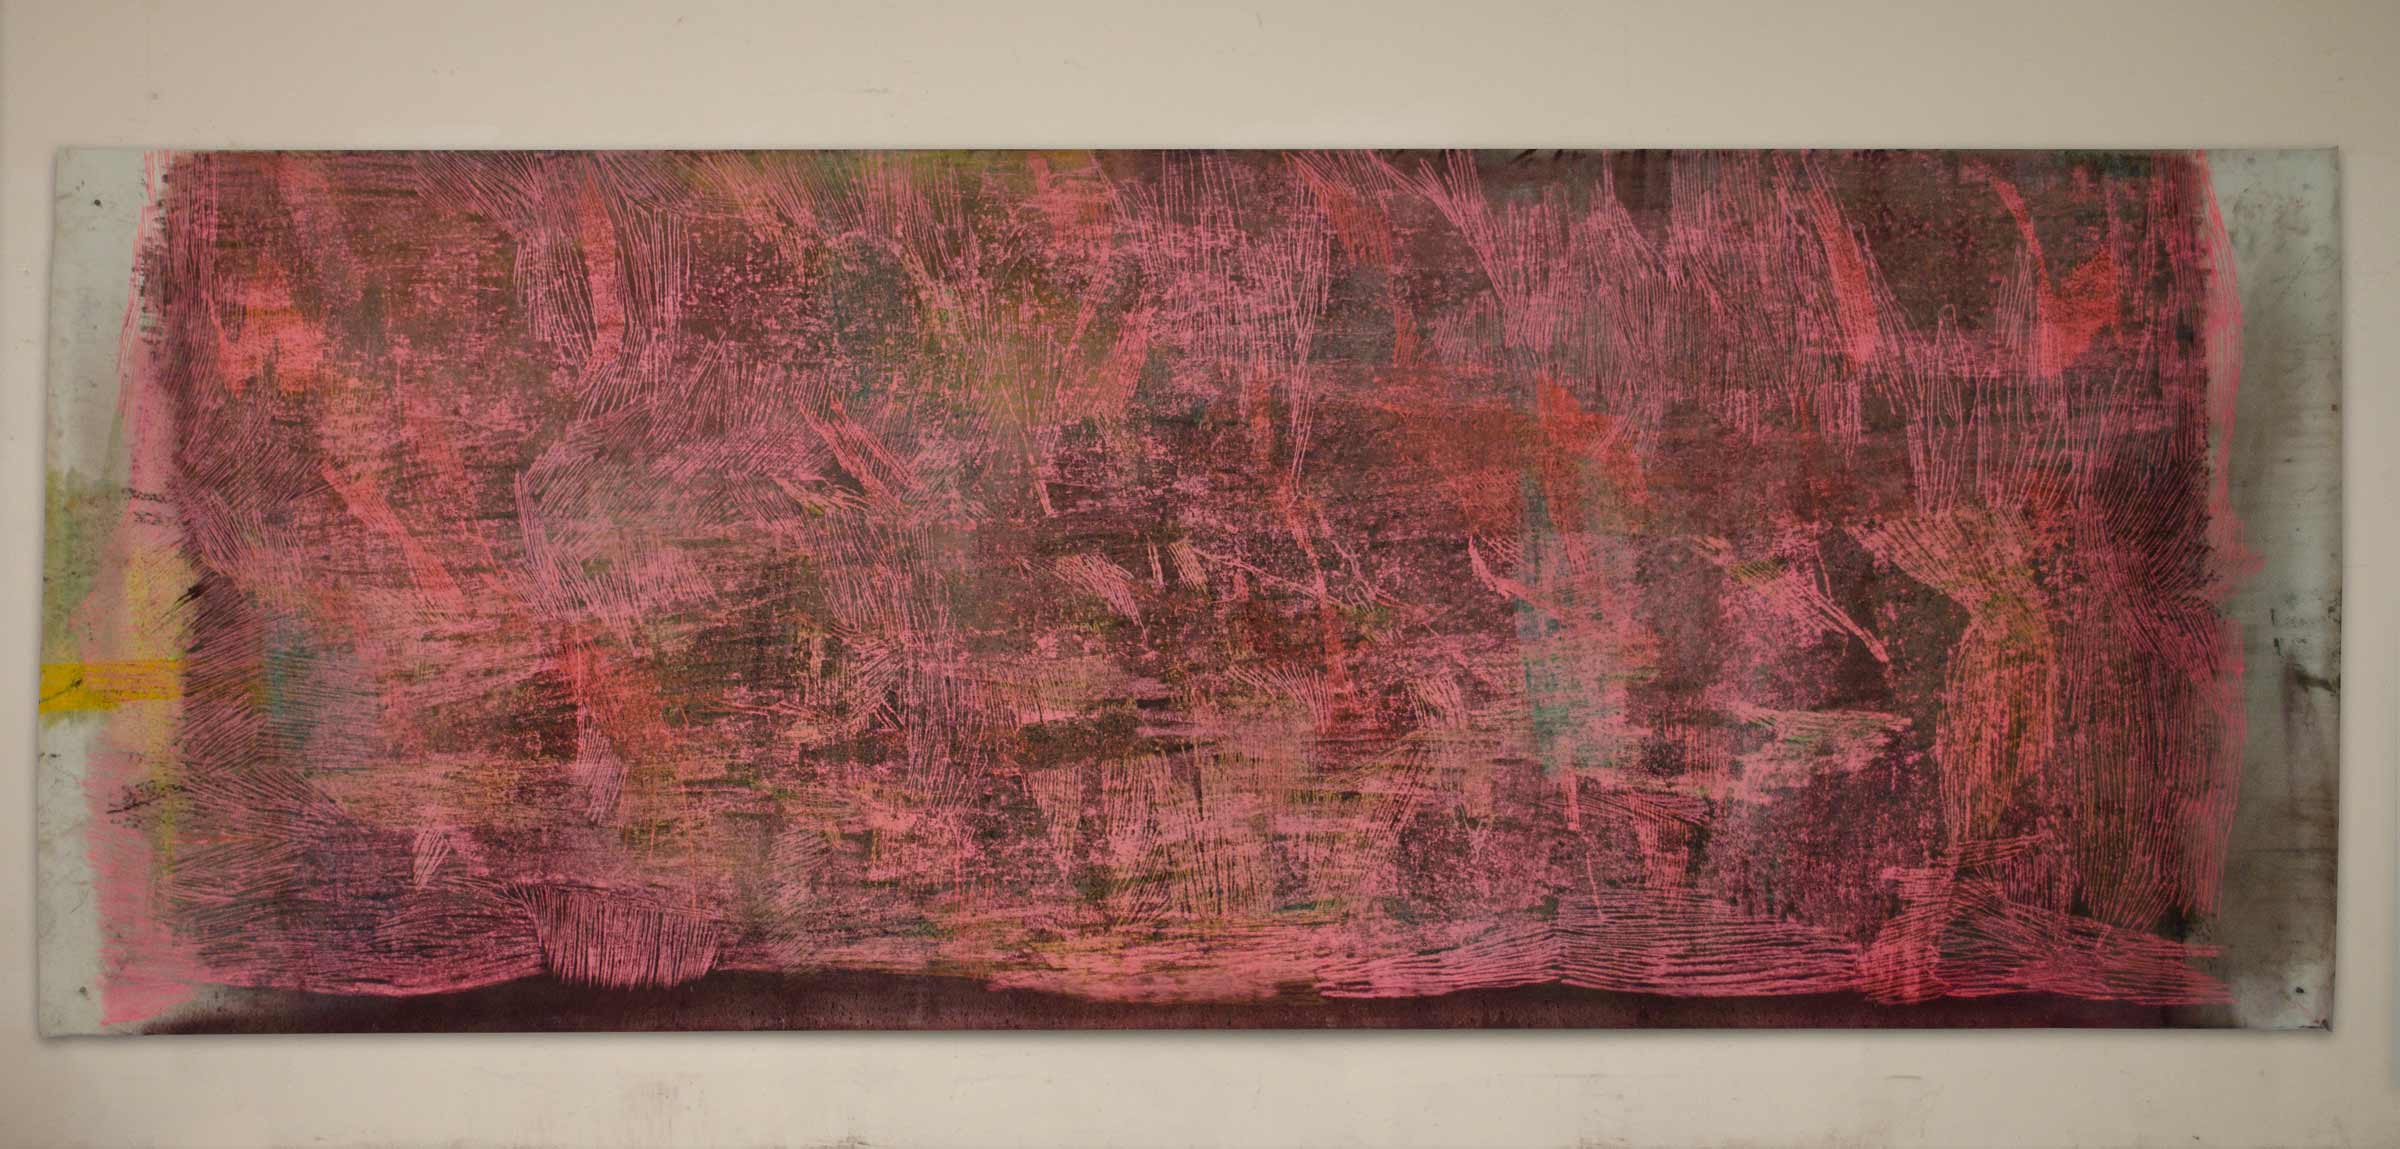 Feld, 2013, 150 x 380 cm, Kreide und Pigment auf Papier